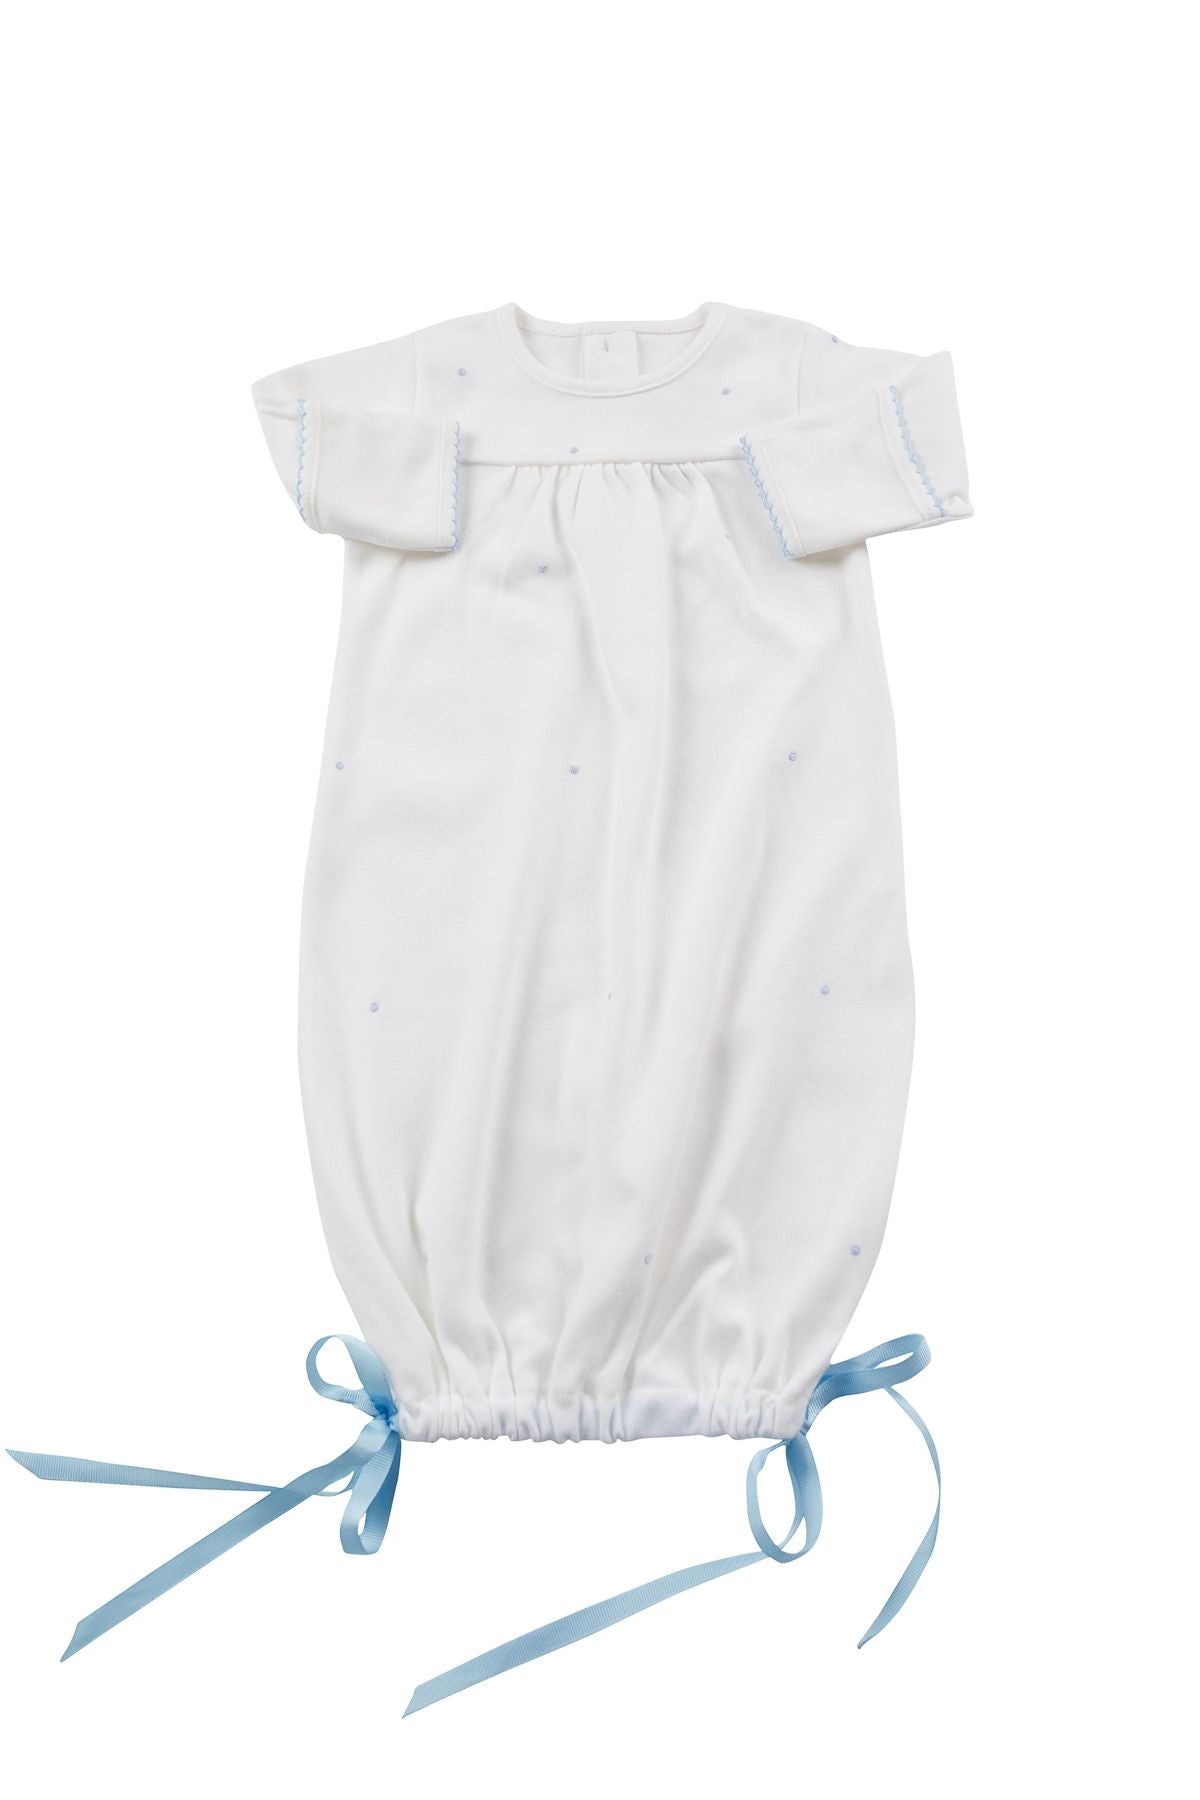 Grayson Knit Gown Scallop - Blue - Breckenridge Baby